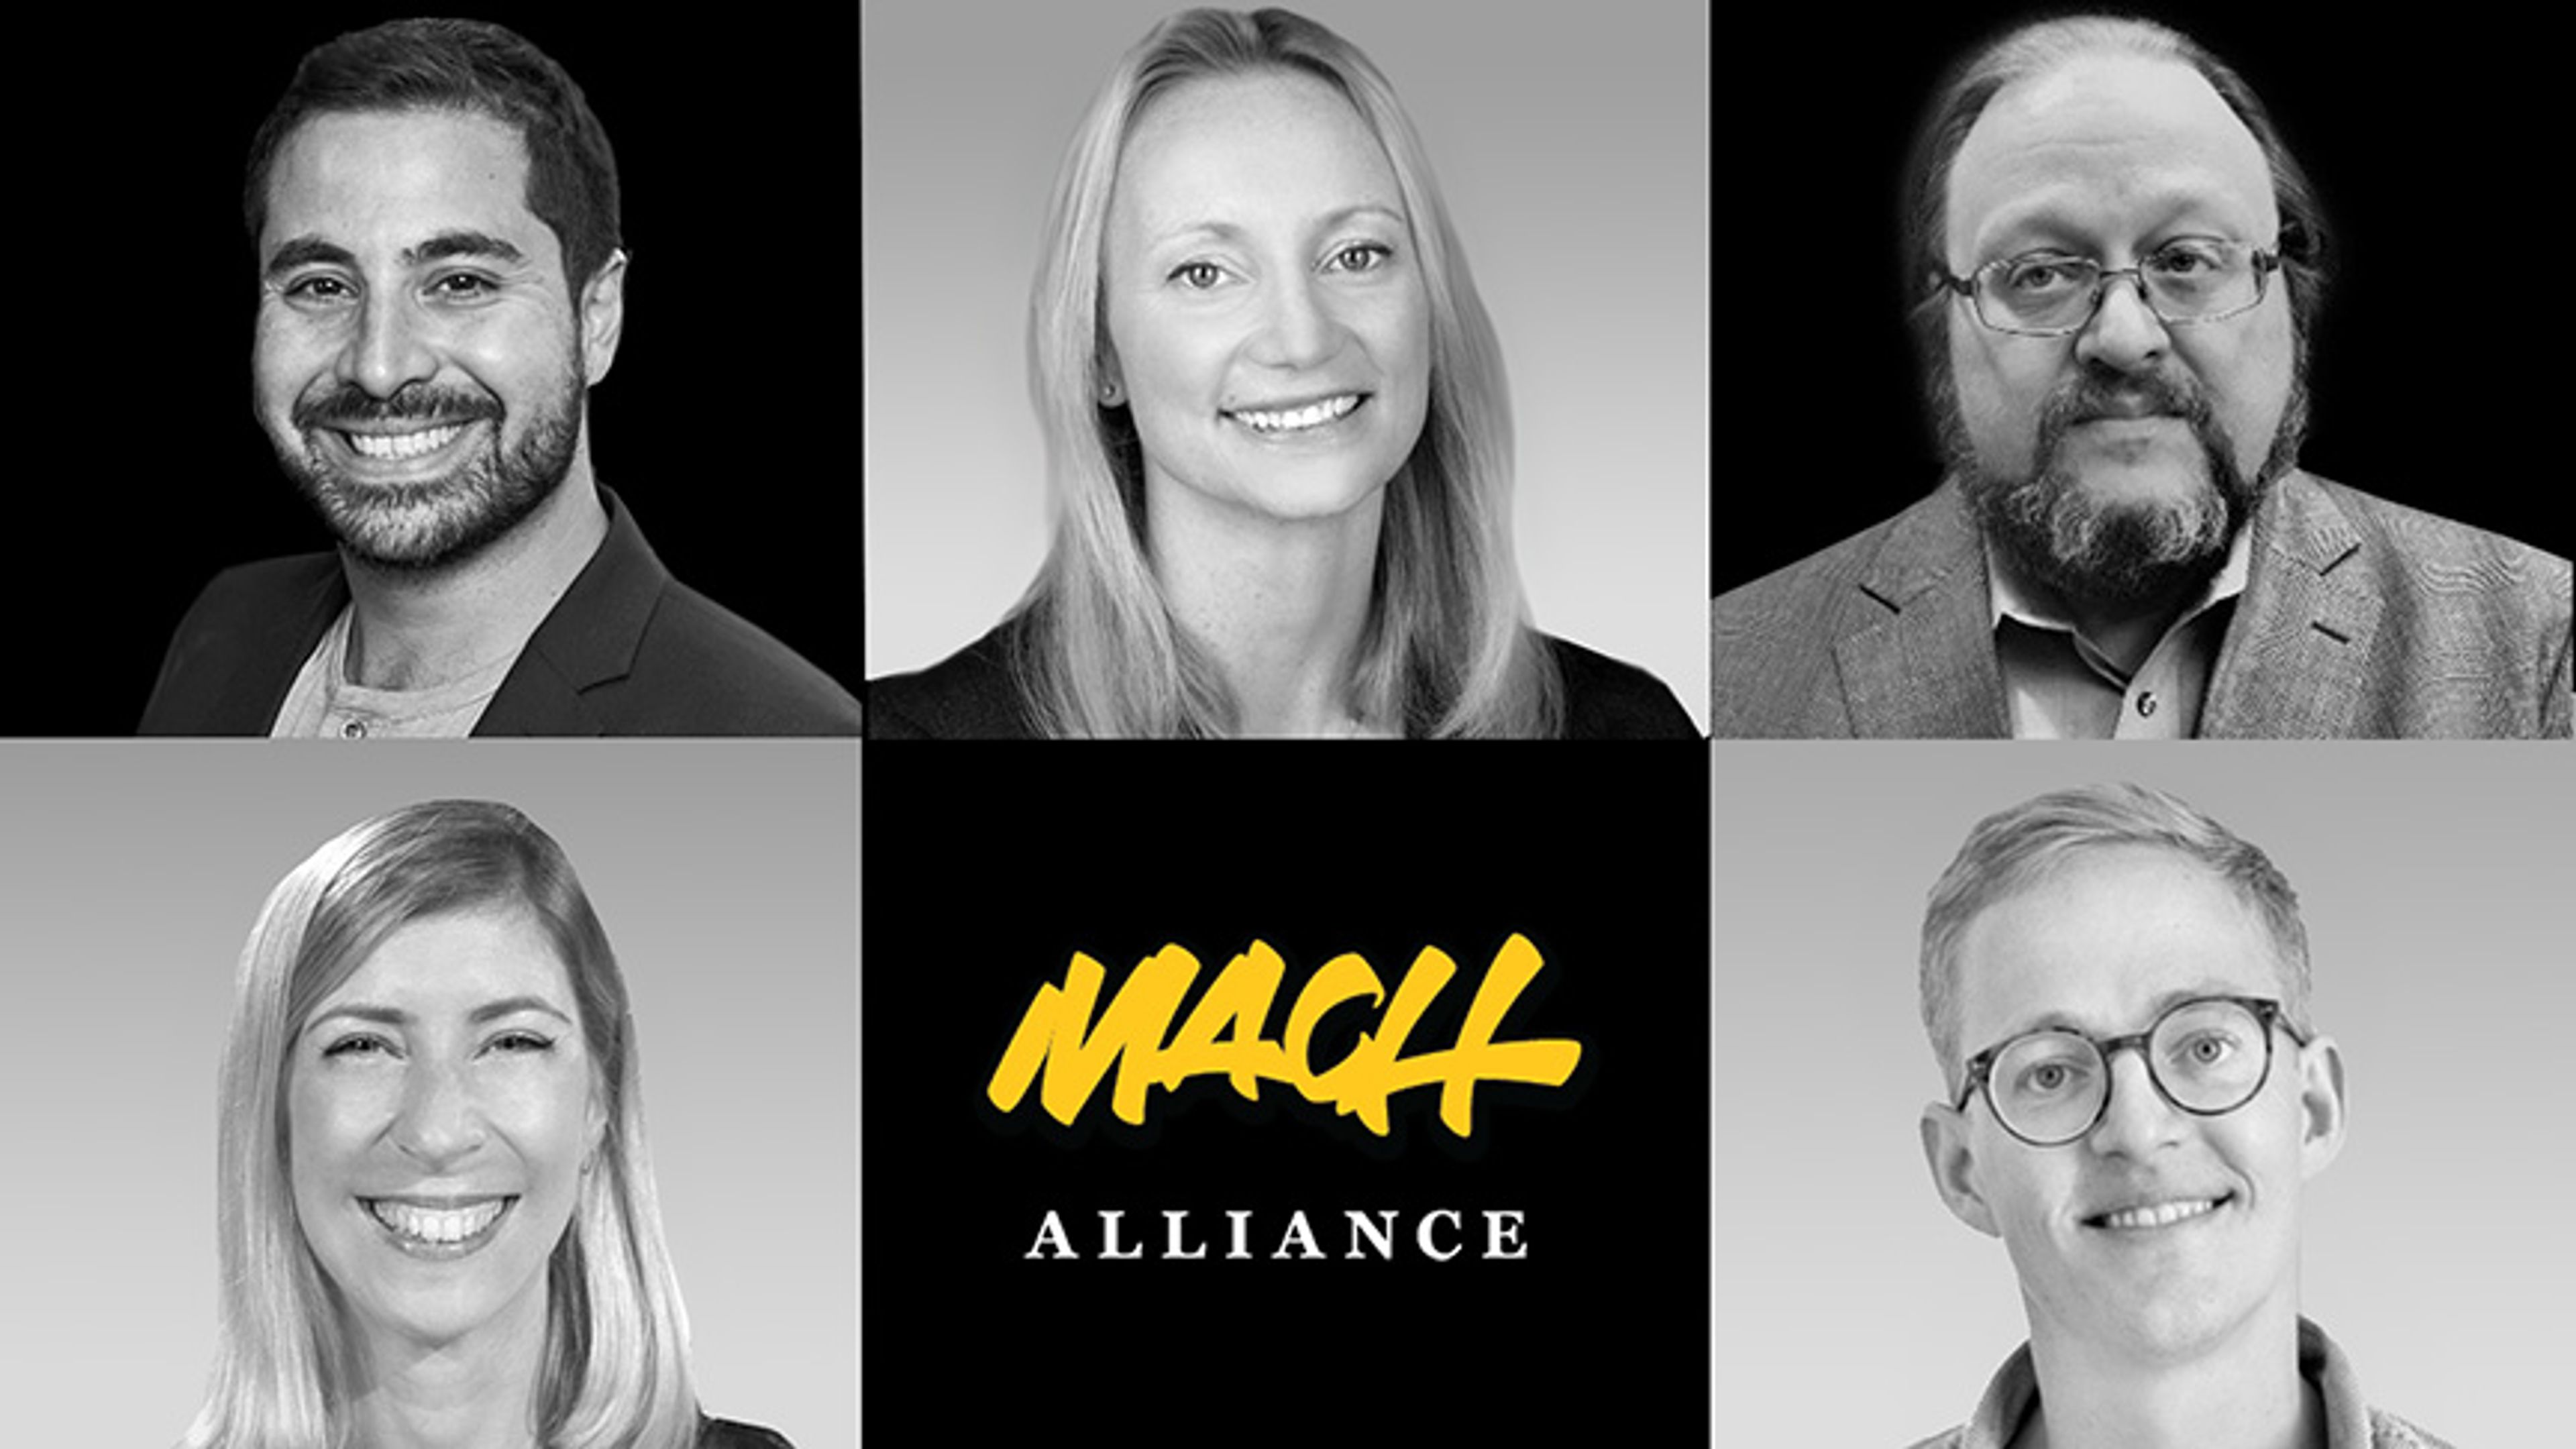 MACH Alliance roundtable participants featuring headshots